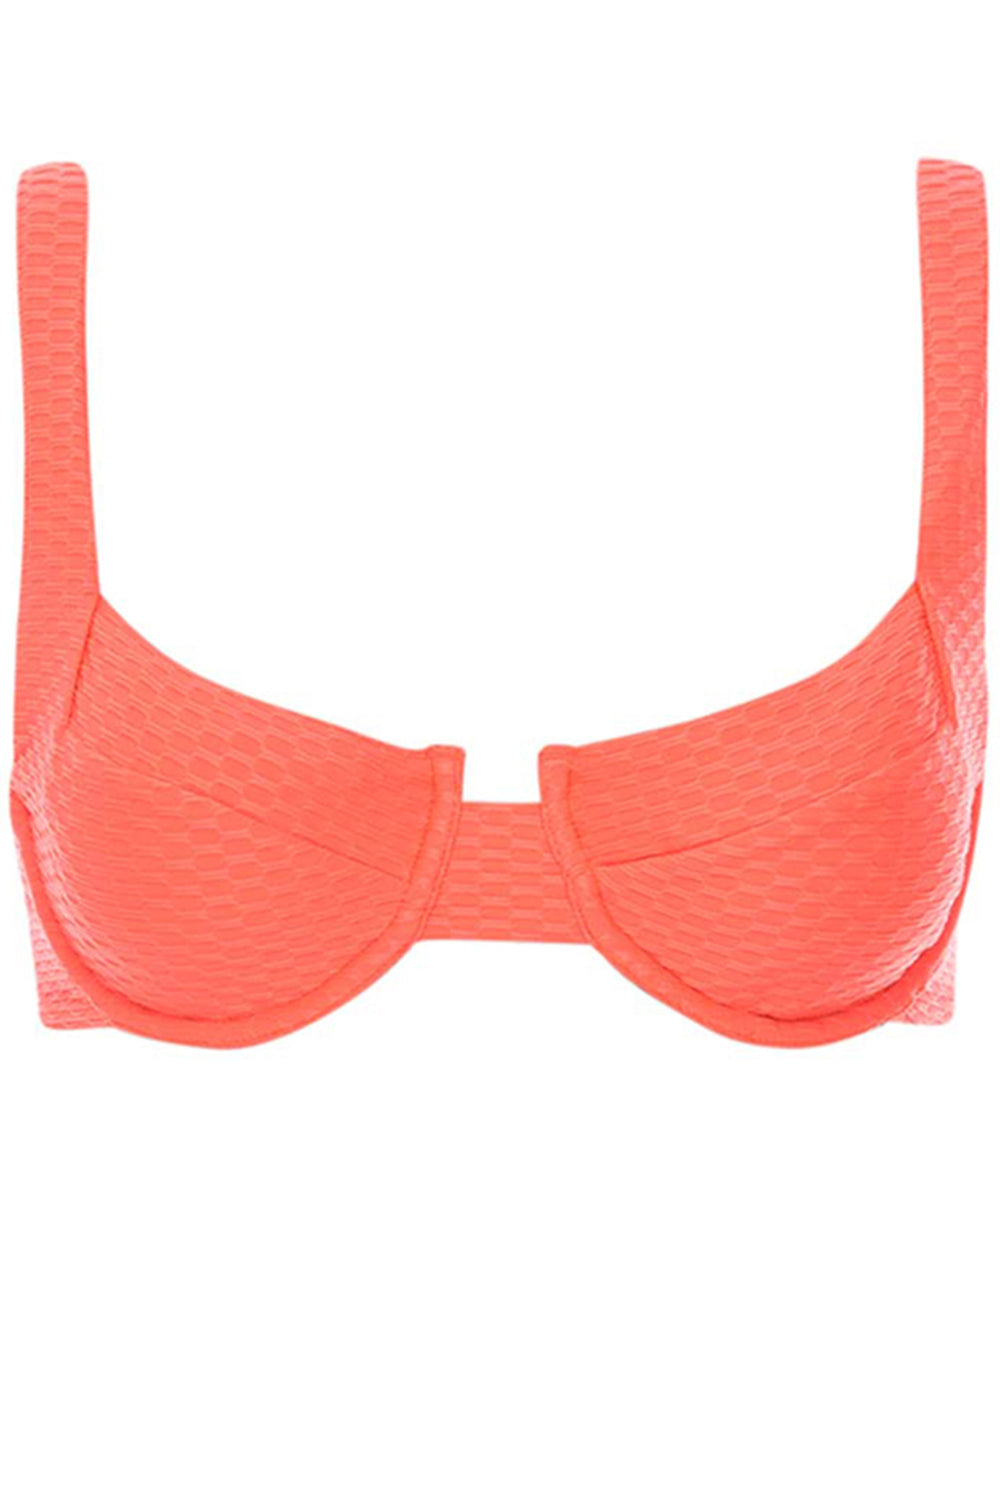 Laguna Bikini Orange Set